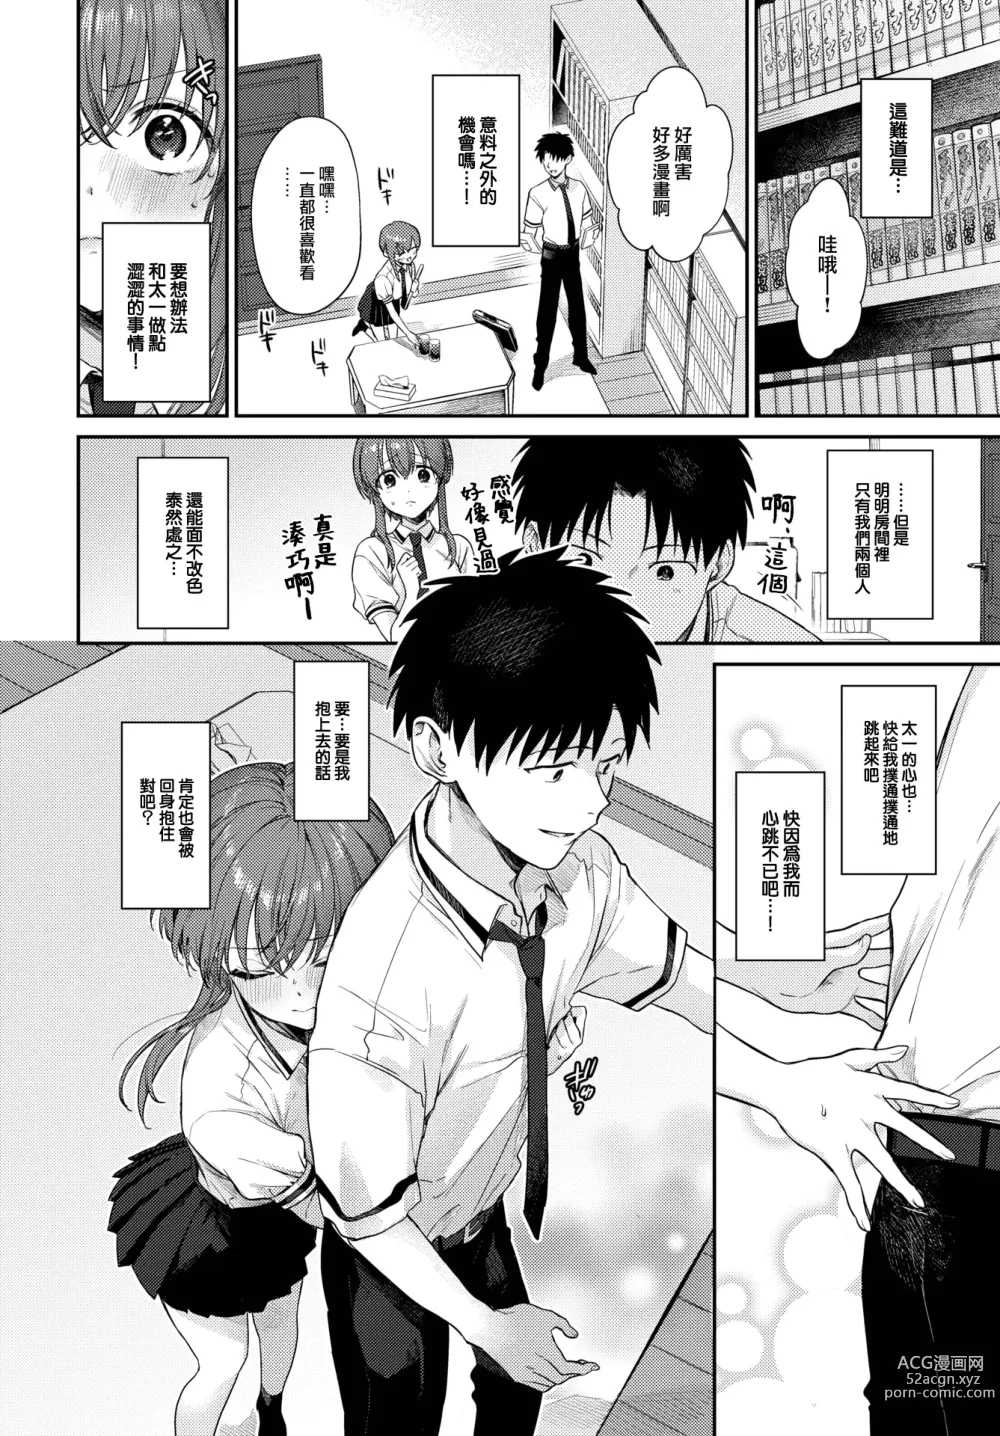 Page 5 of manga Come Pain!